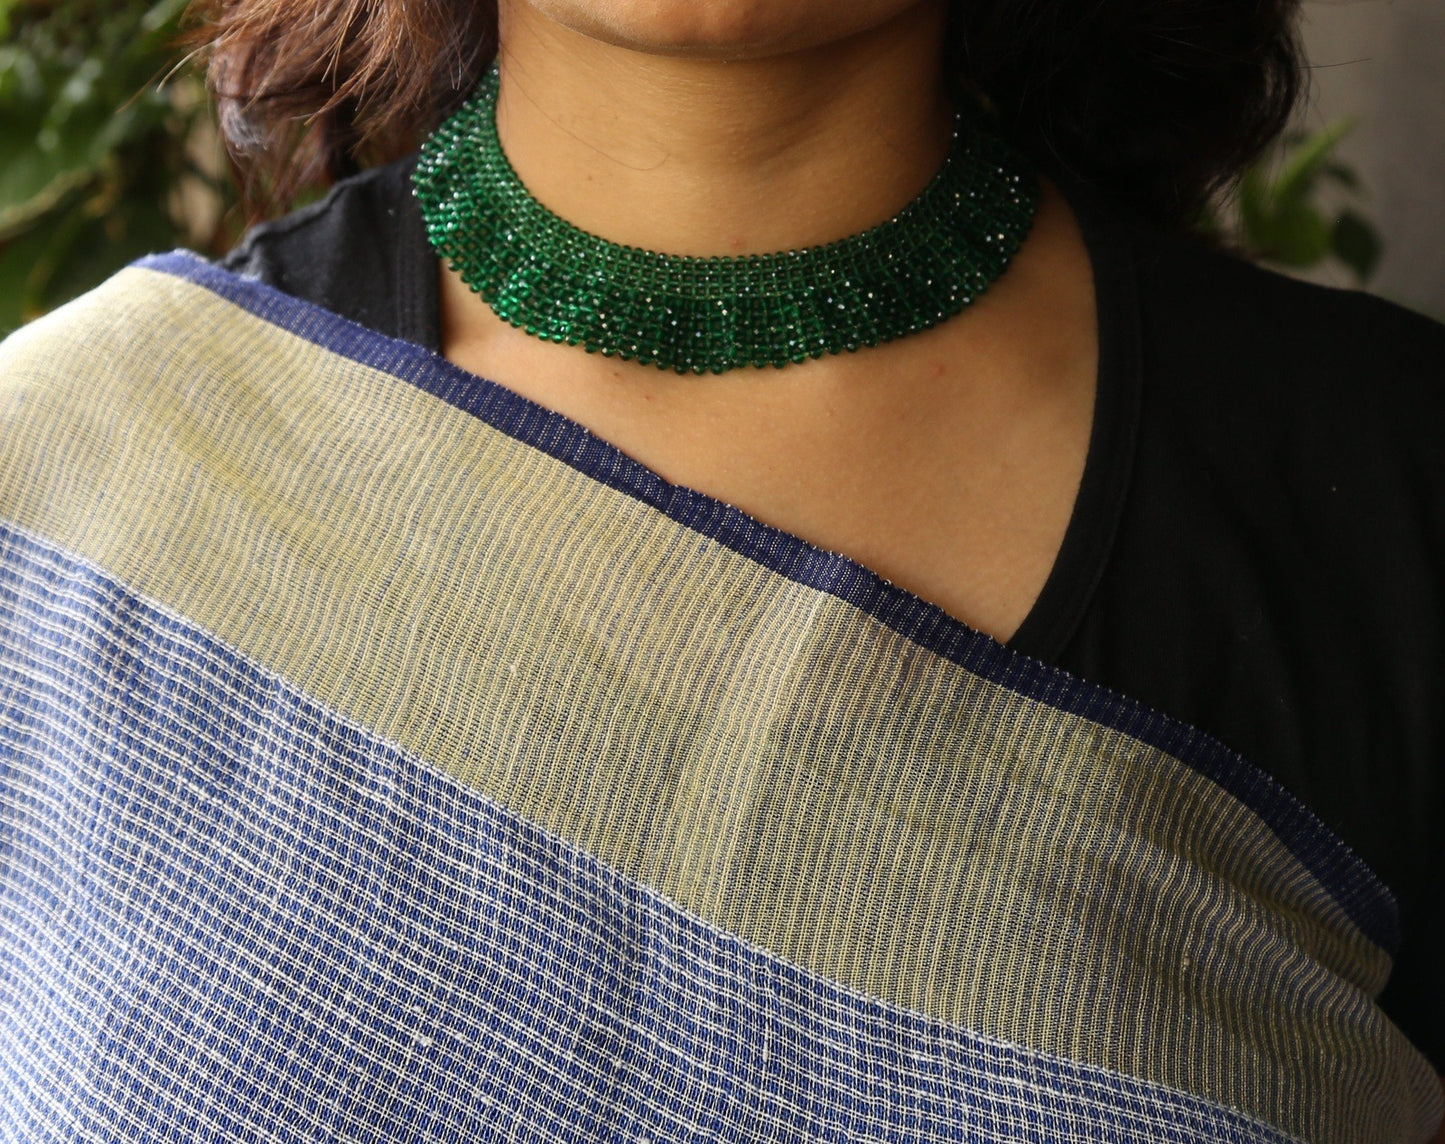 Emerald green net necklace